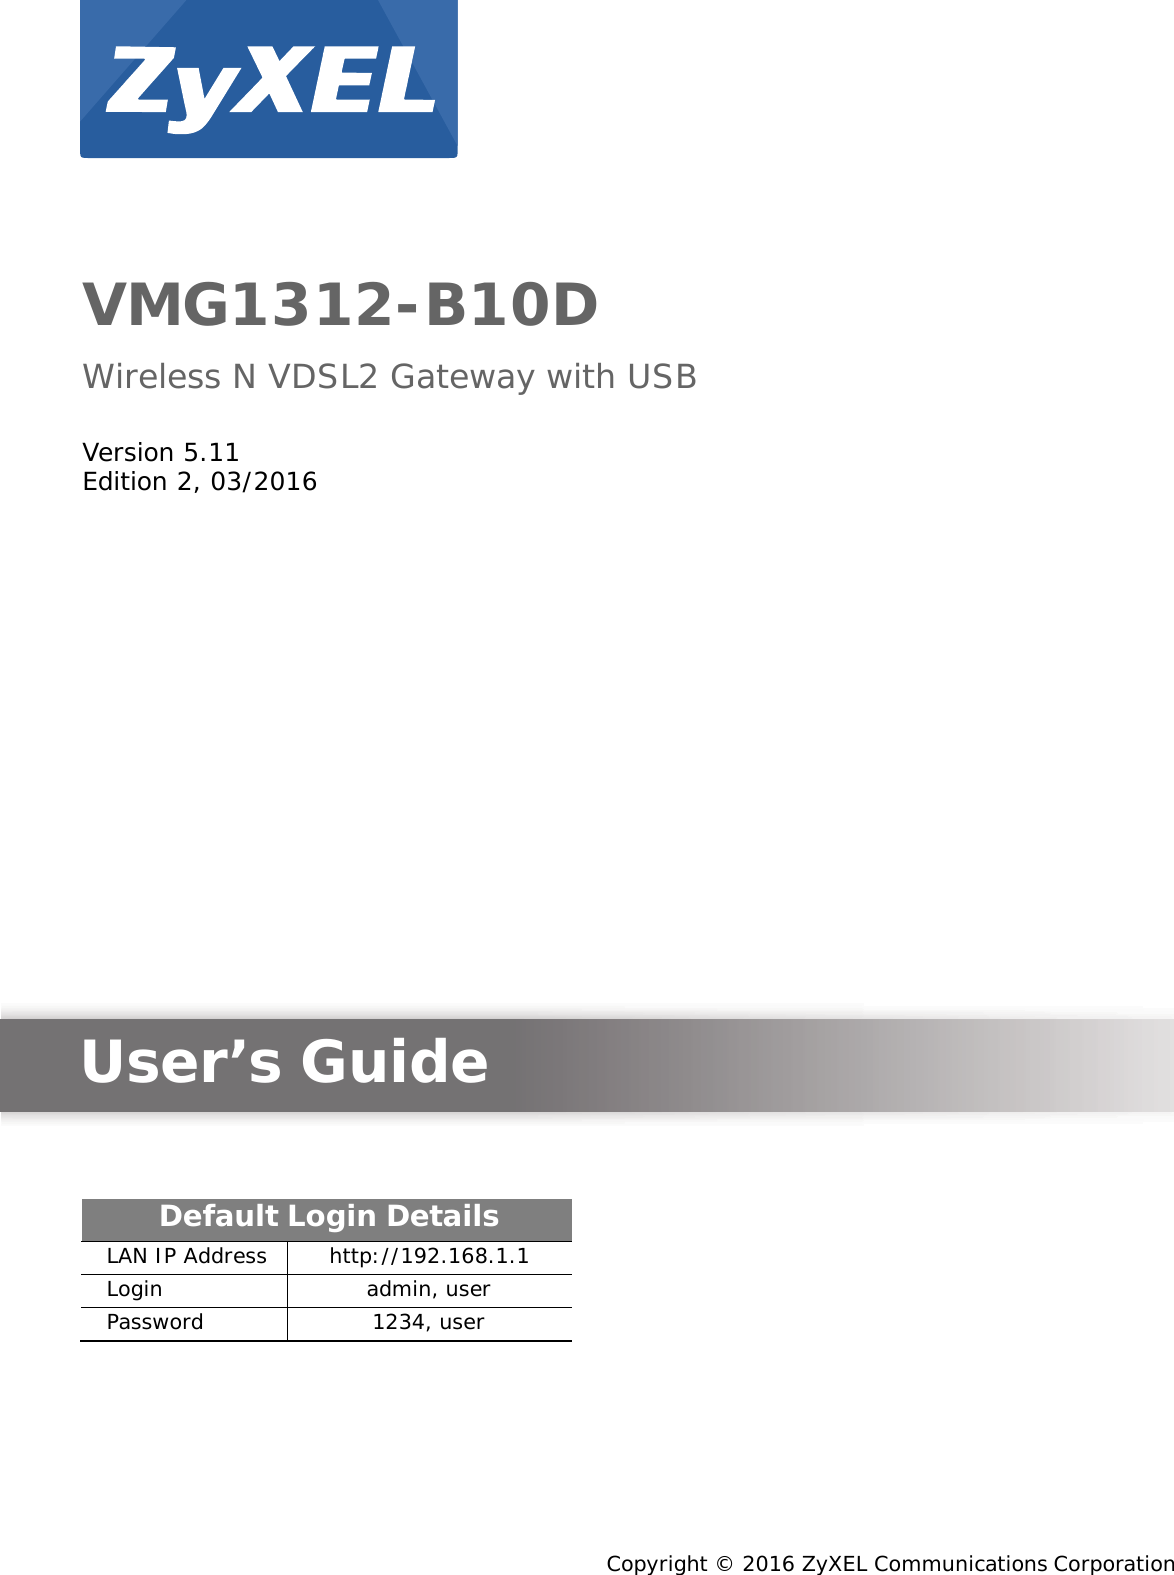             VMG1312-B10D  Wireless N VDSL2 Gateway with USB   Version 5.11 Edition 2, 03/2016                           User’s Guide      Default Login Details LAN IP Address http://192.168.1.1 Login admin, user Password 1234, user           Copyright © 2016 ZyXEL Communications Corporation 